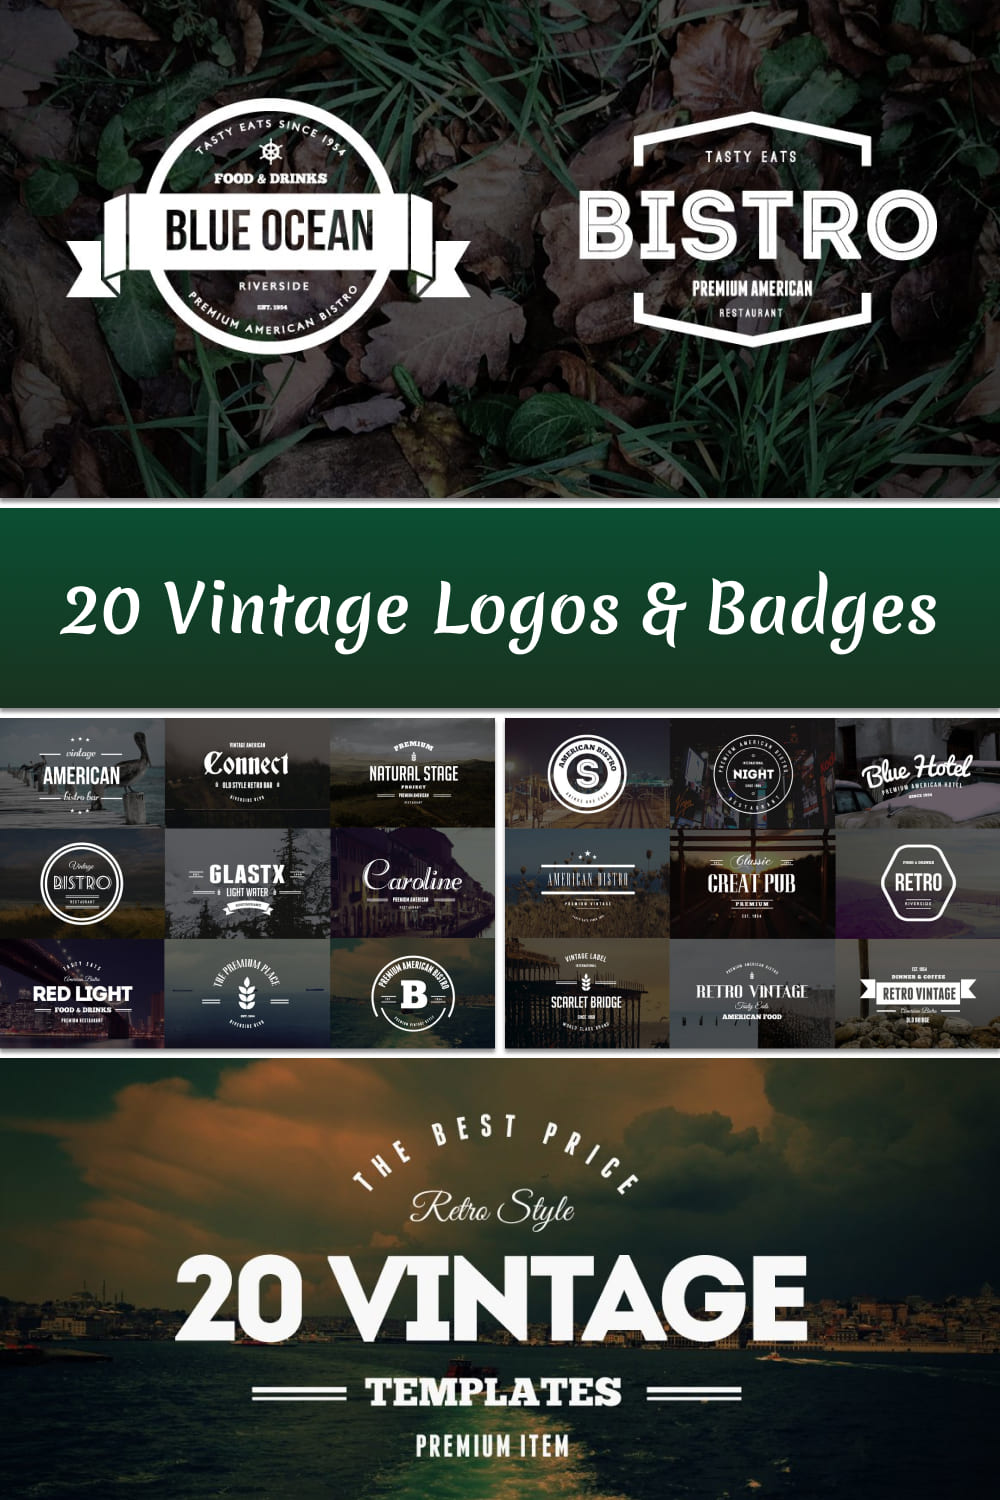 20 Vintage Logos & Badges Vol. 2 - Pinterest Image Preview.